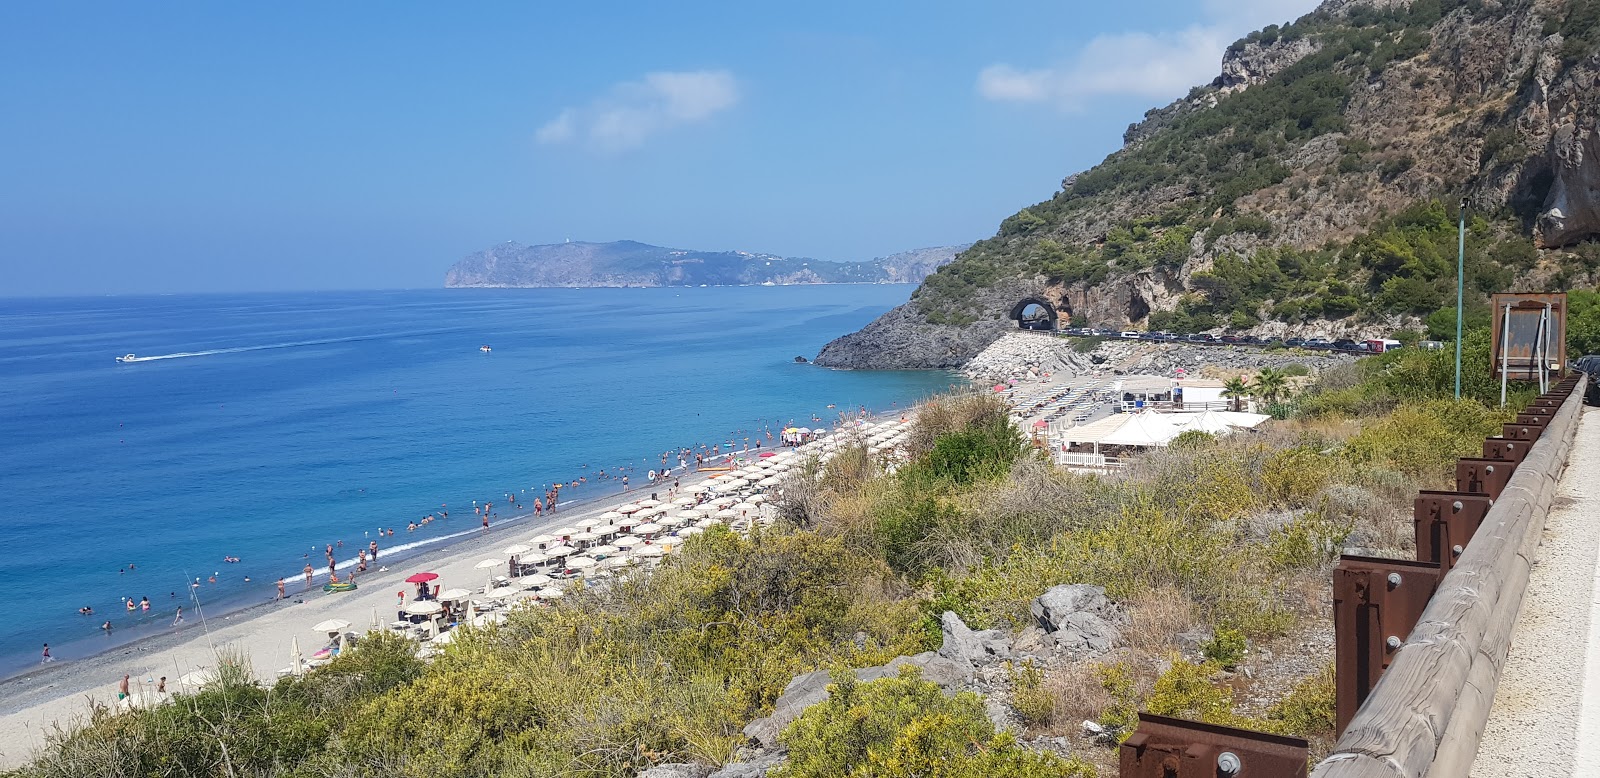 Foto de Spiaggia del Troncone com praia espaçosa